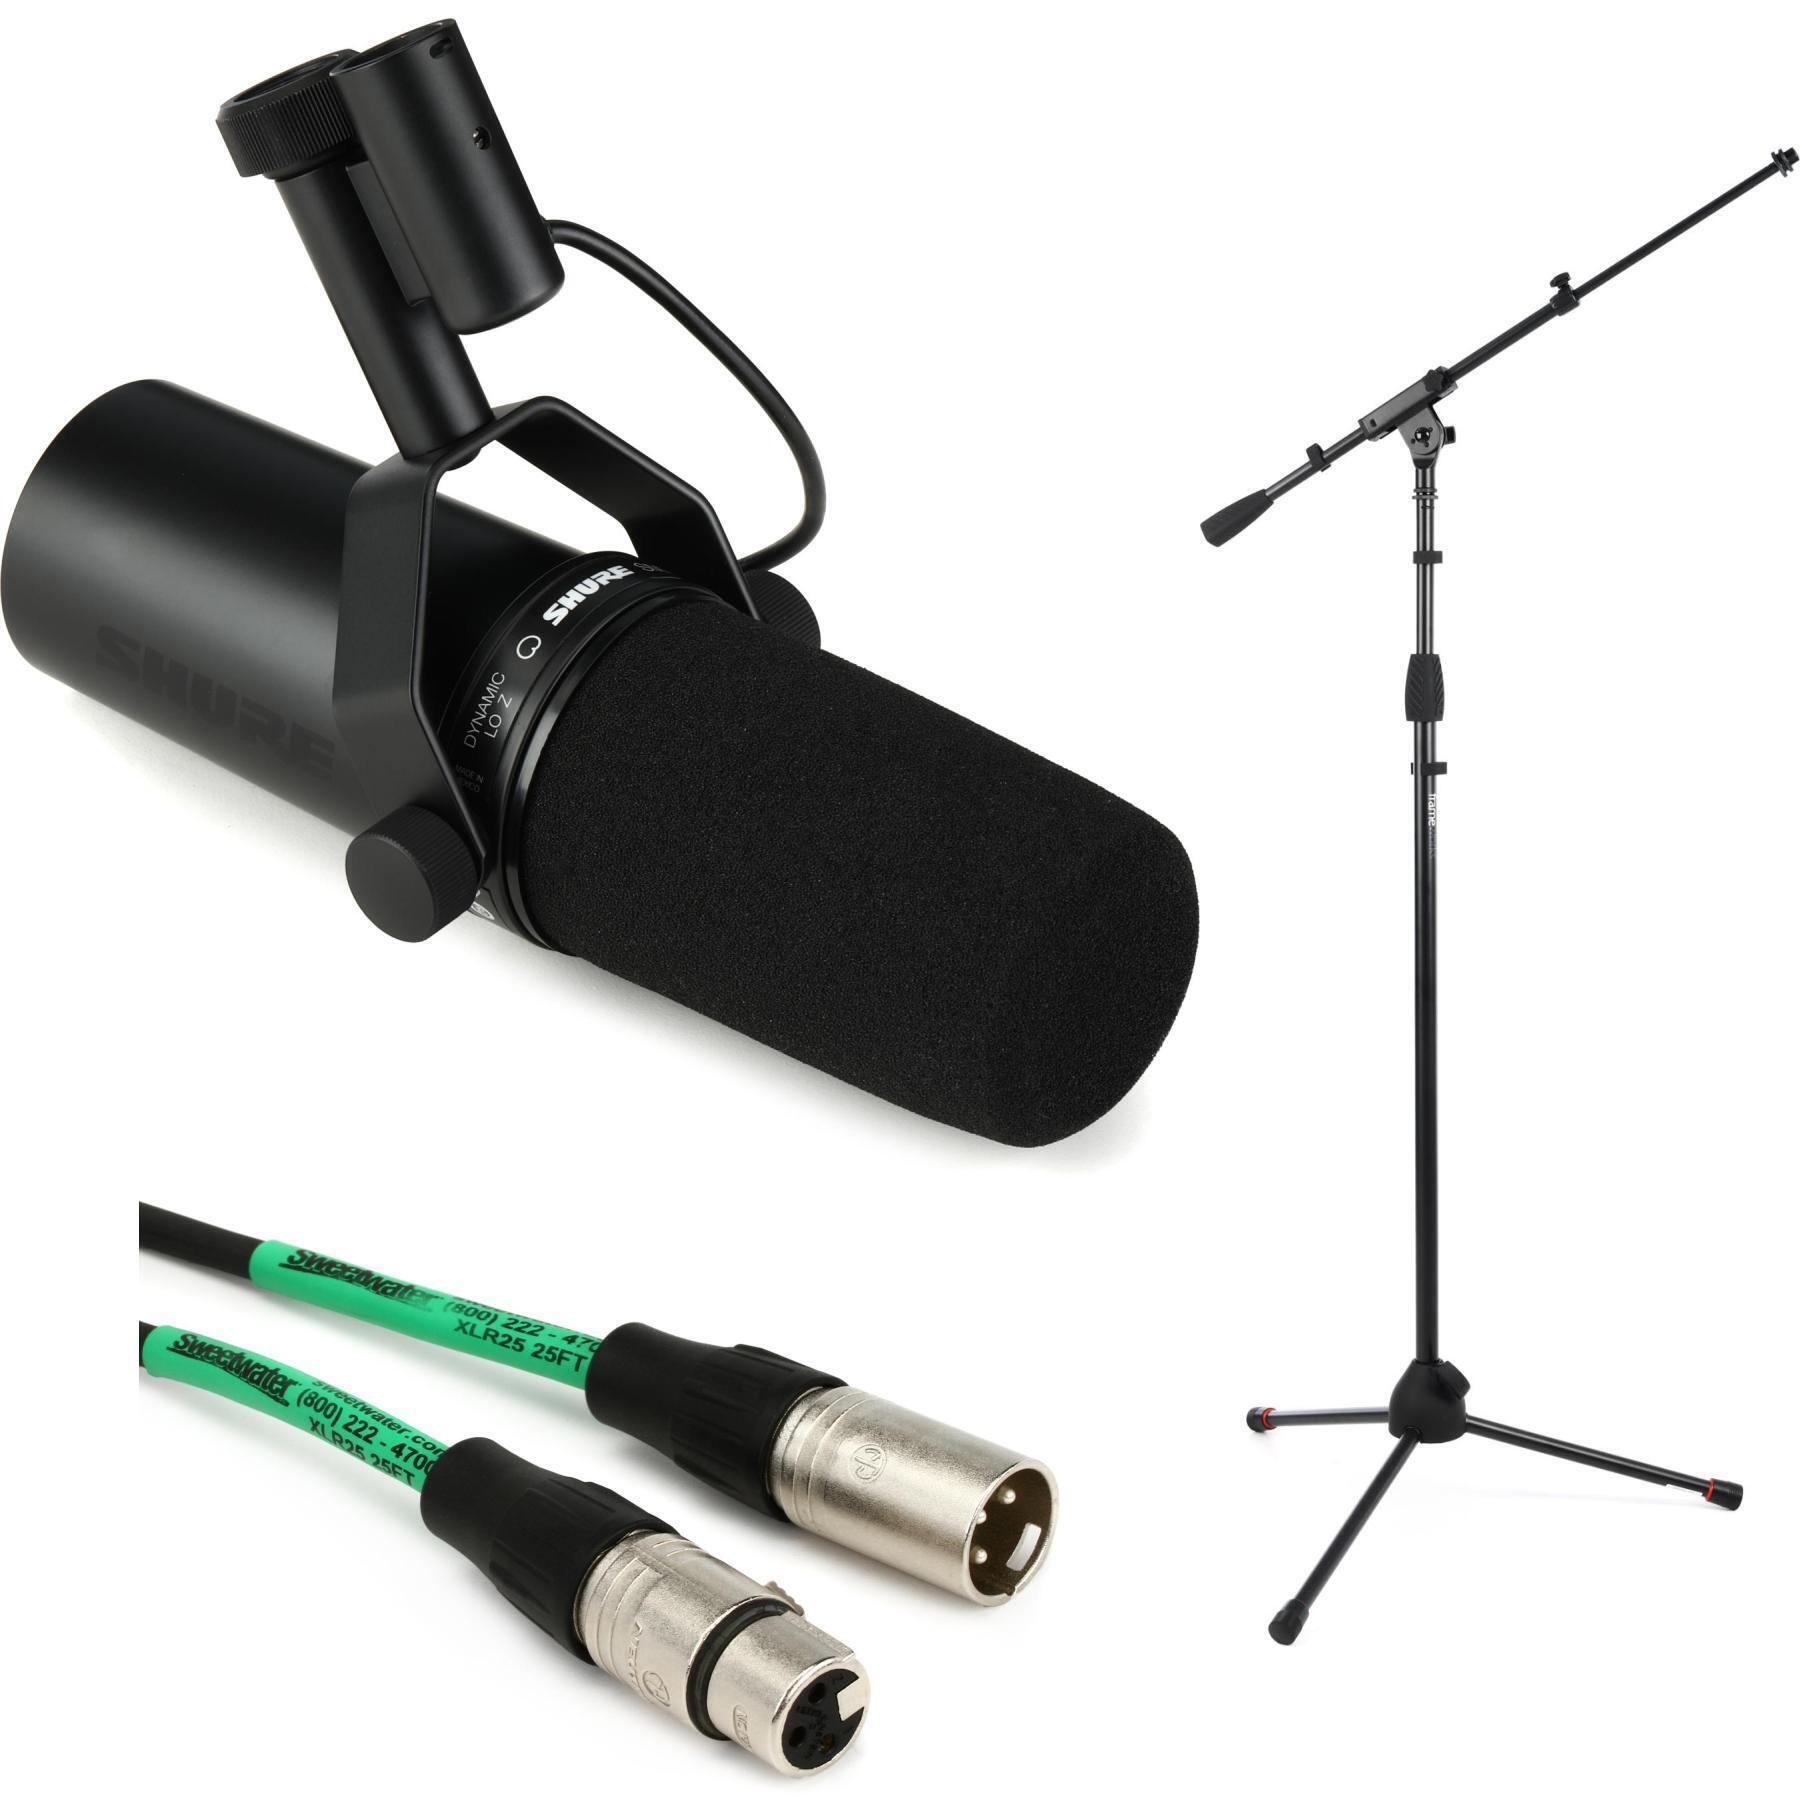 Shure SM7dB Dynamic Cardioid Microphone STUDIO PAK